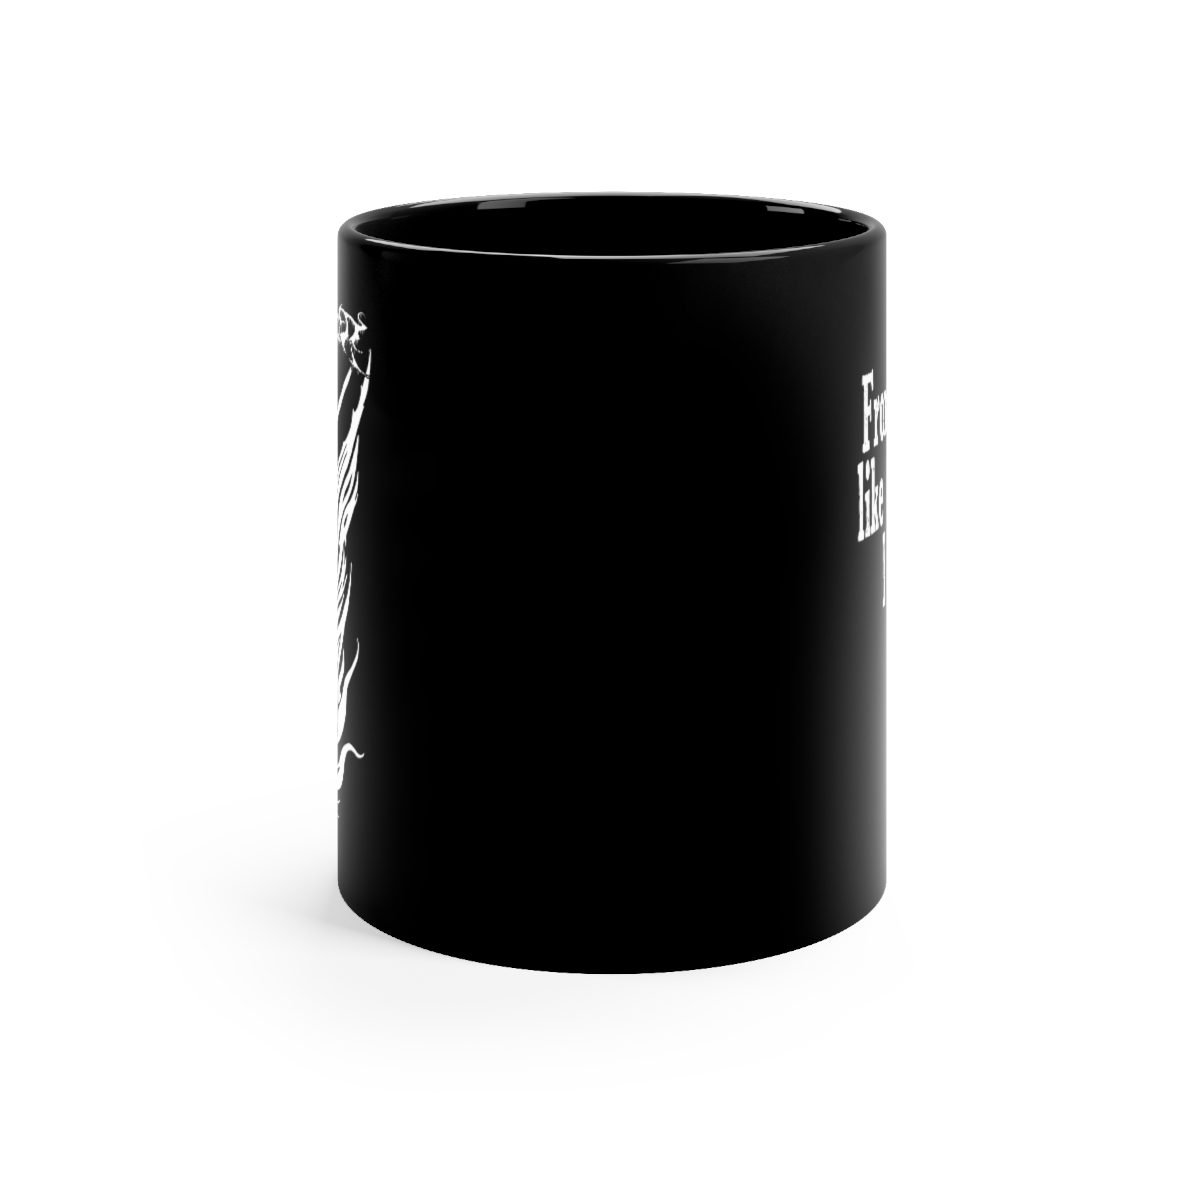 Pantokrator – Phoenix Rising Black mug 11oz